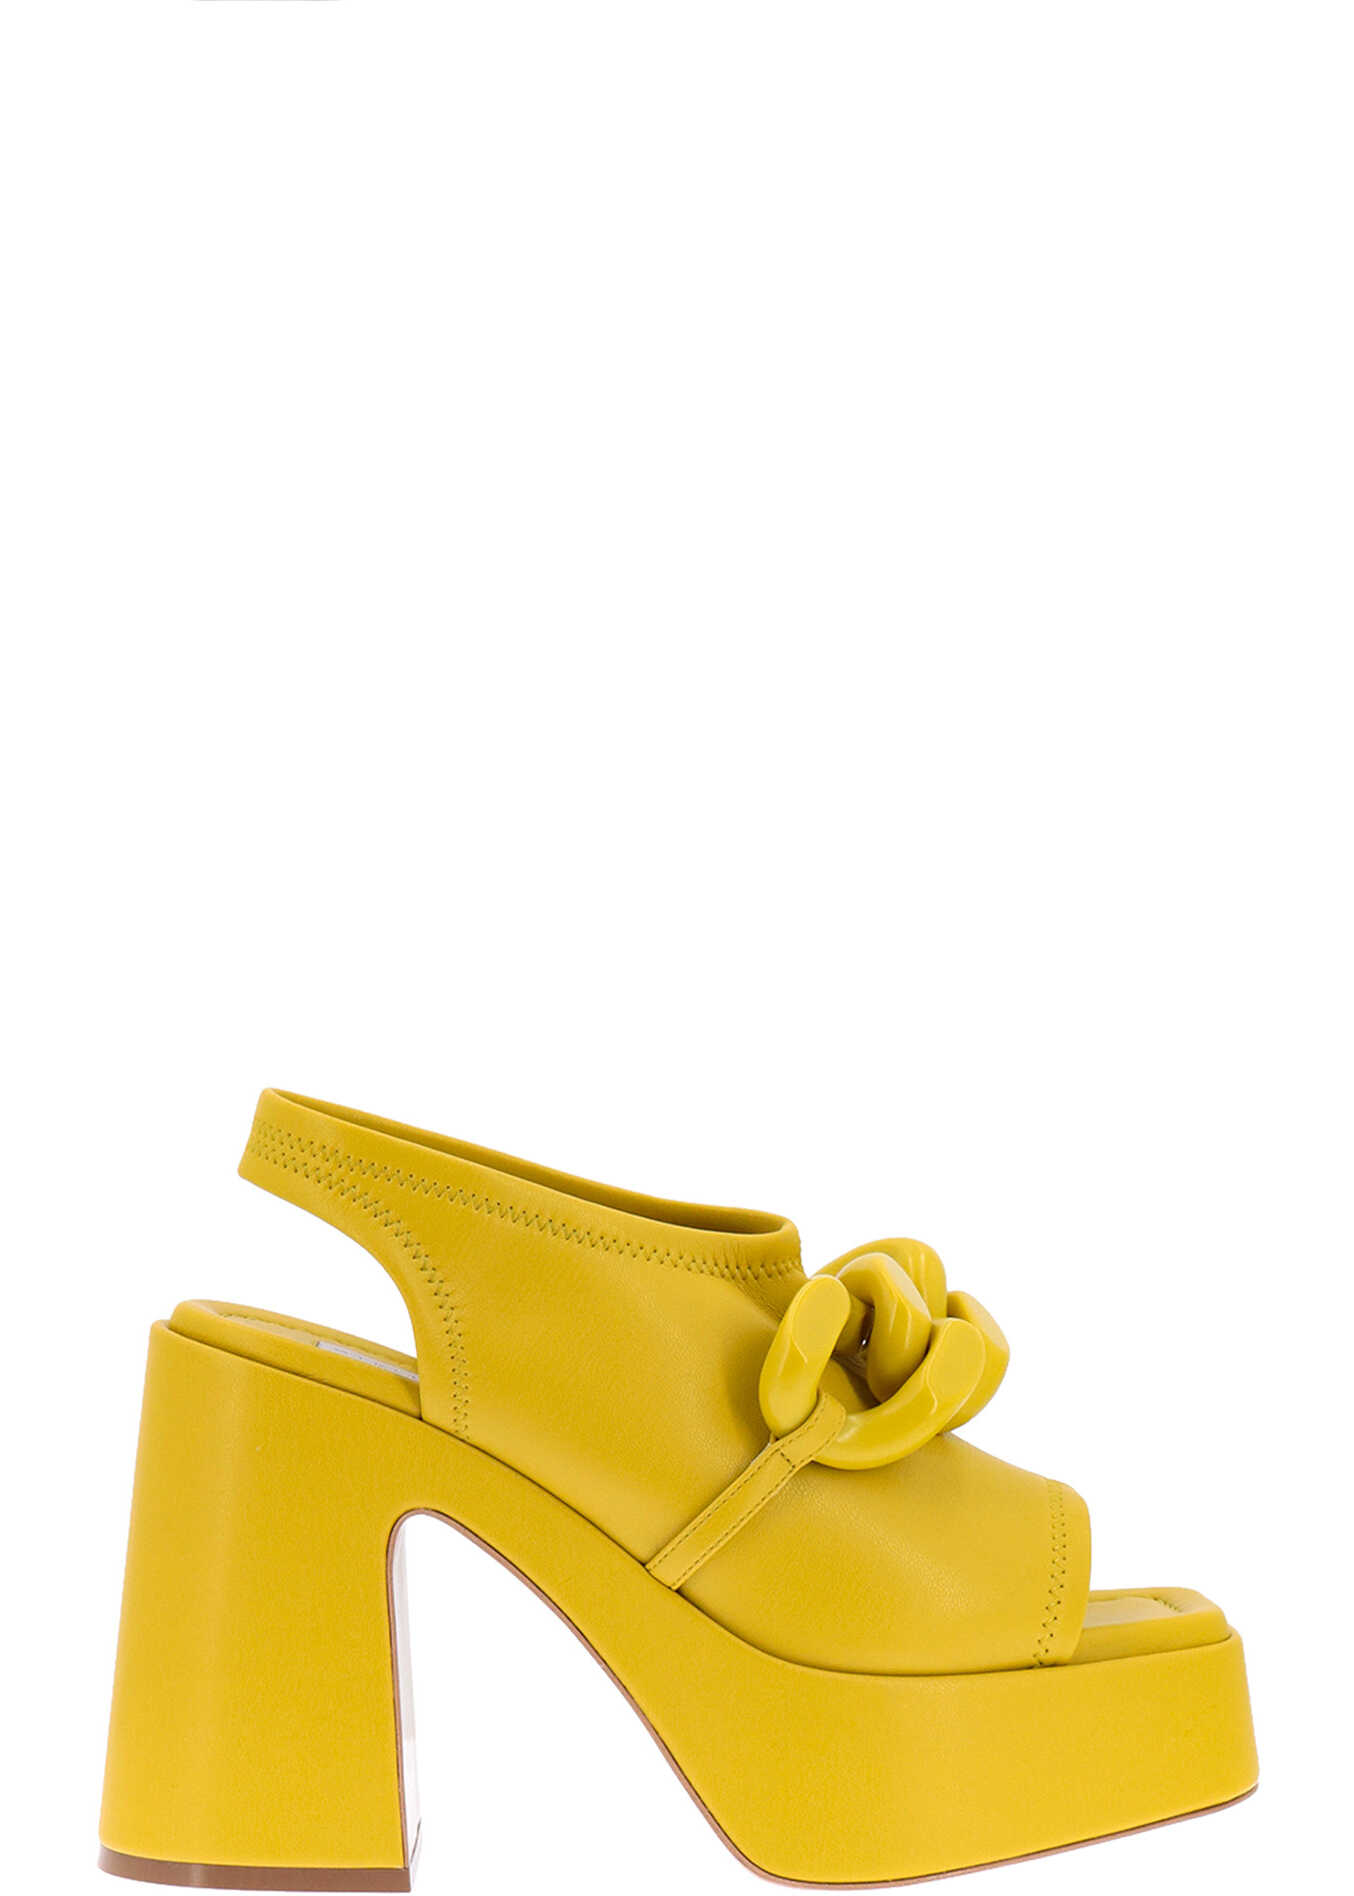 Stella McCartney Sandals Yellow